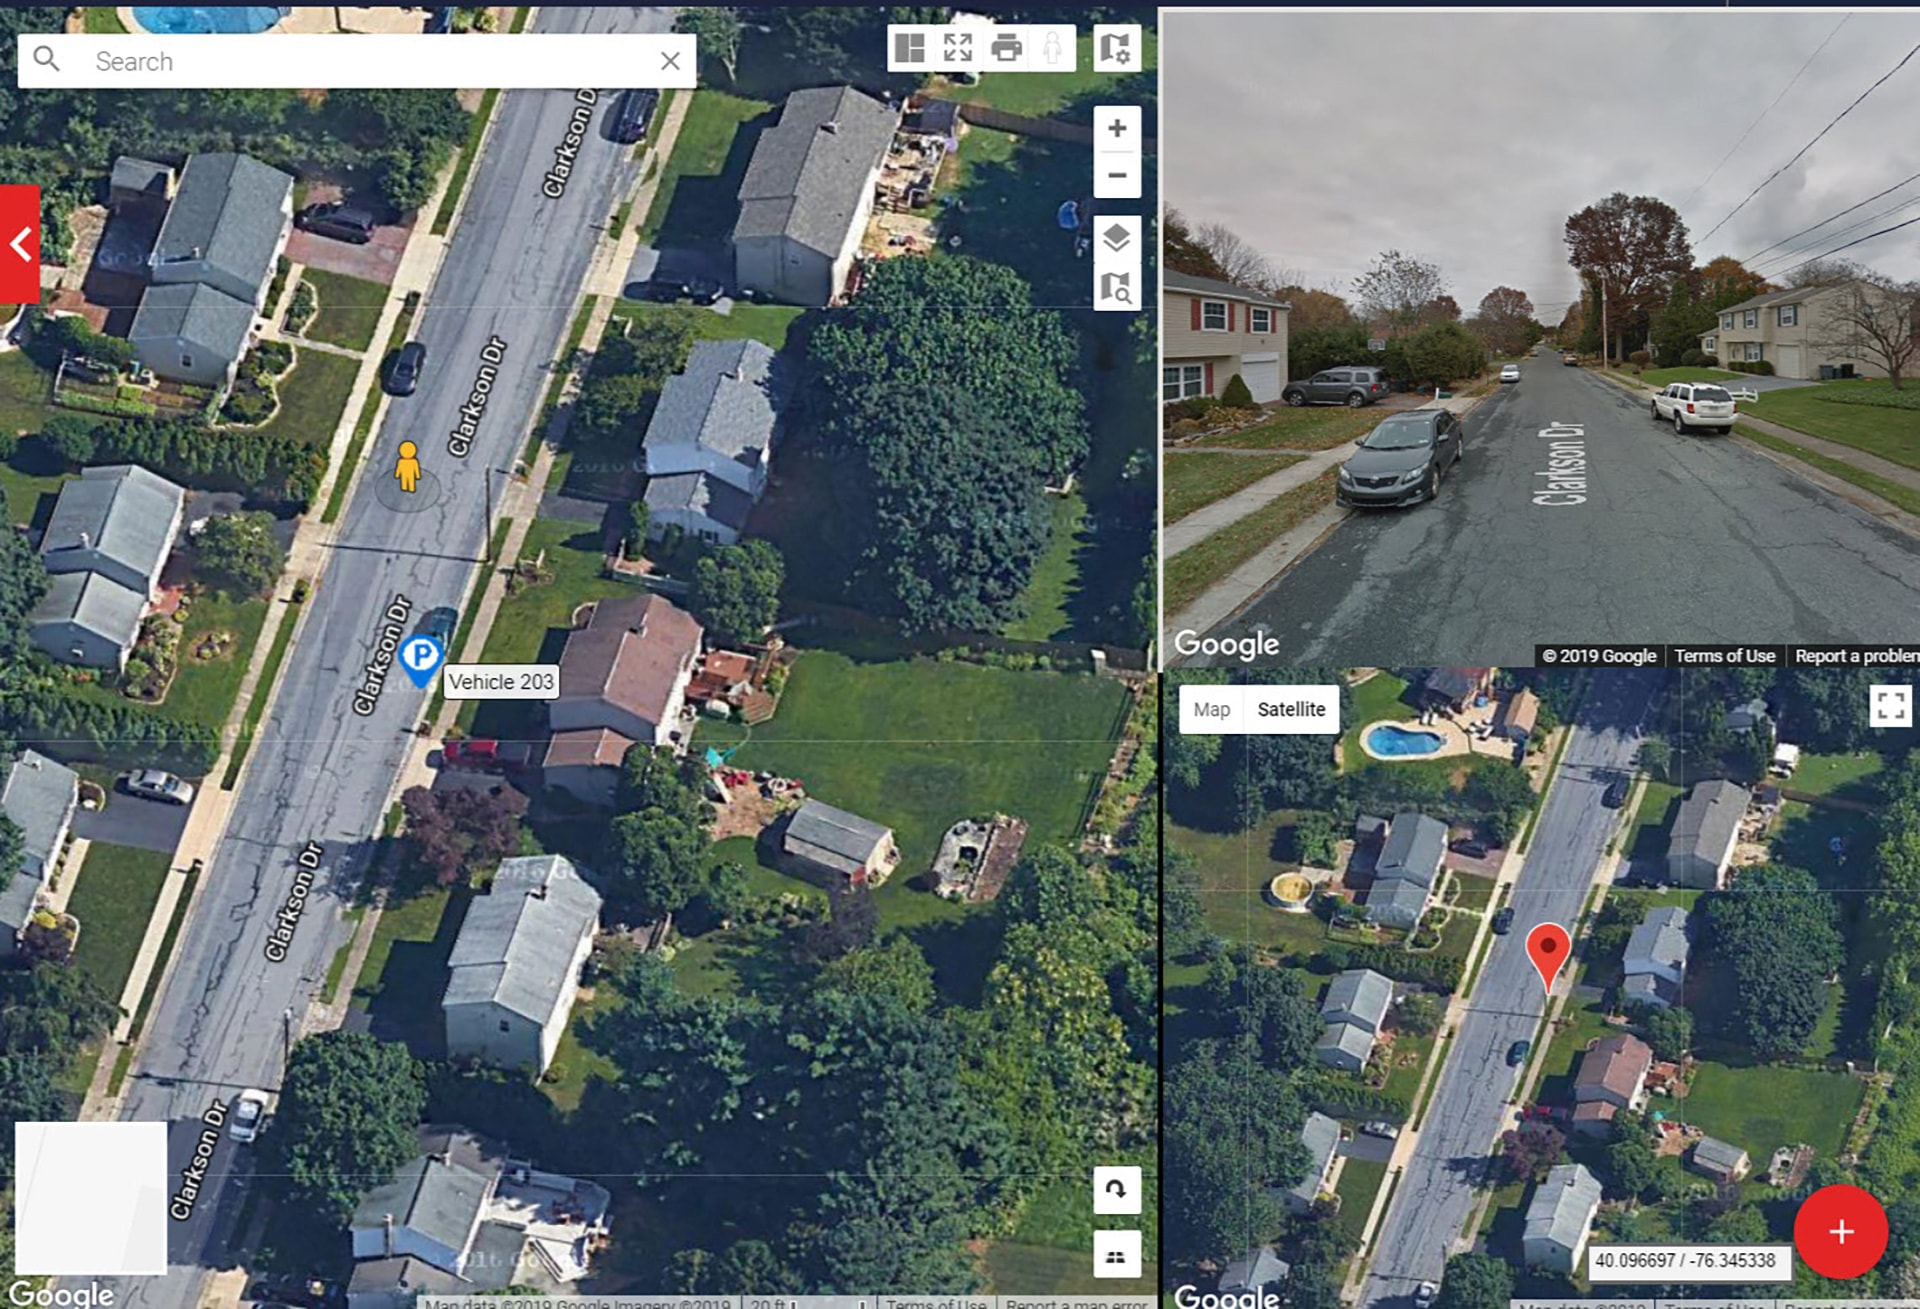 Multi-street view in StreetEagle maps